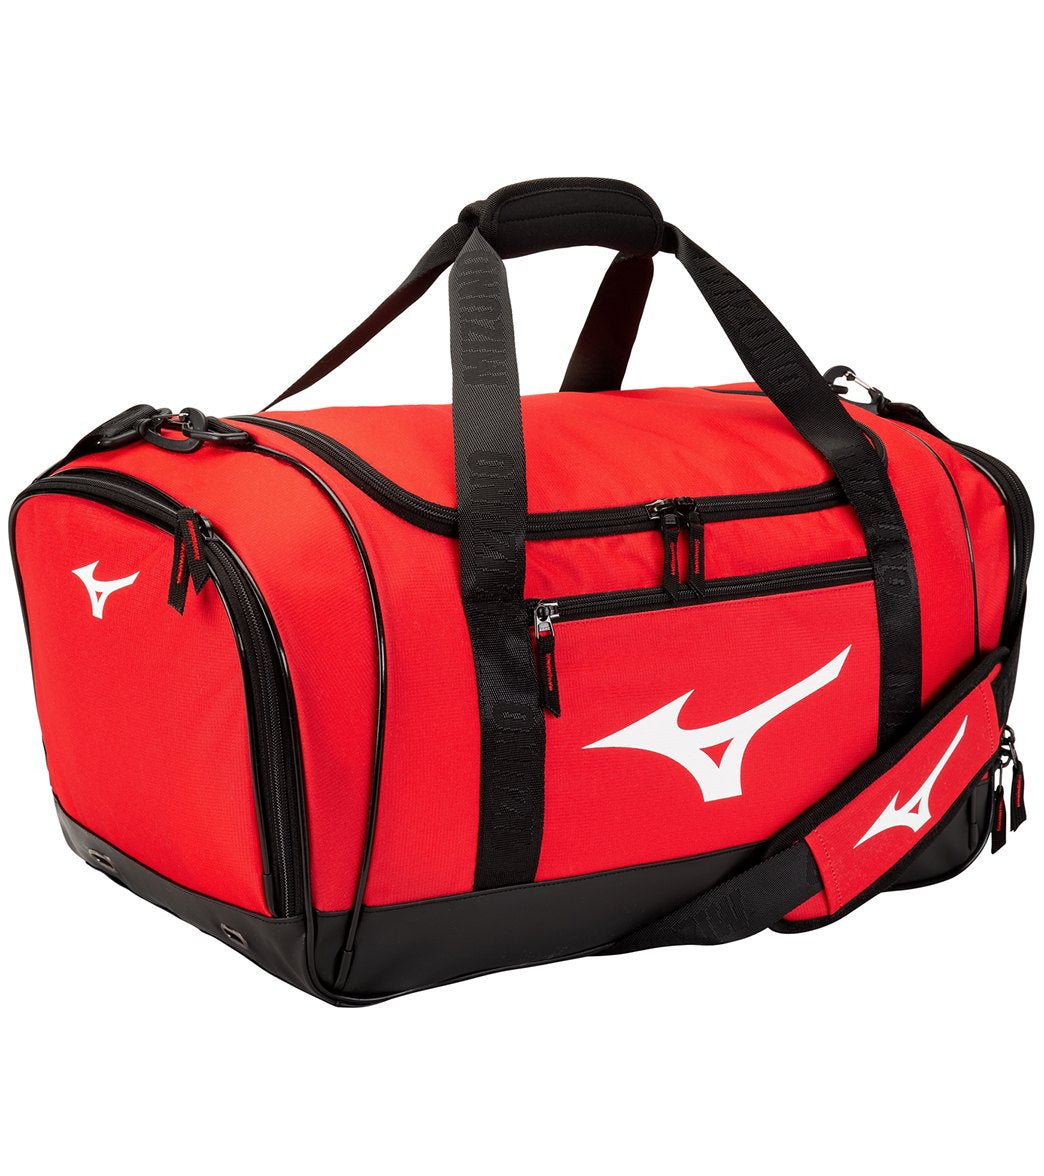 Mizuno All Sport Duffle Bag - Red - Swimoutlet.com